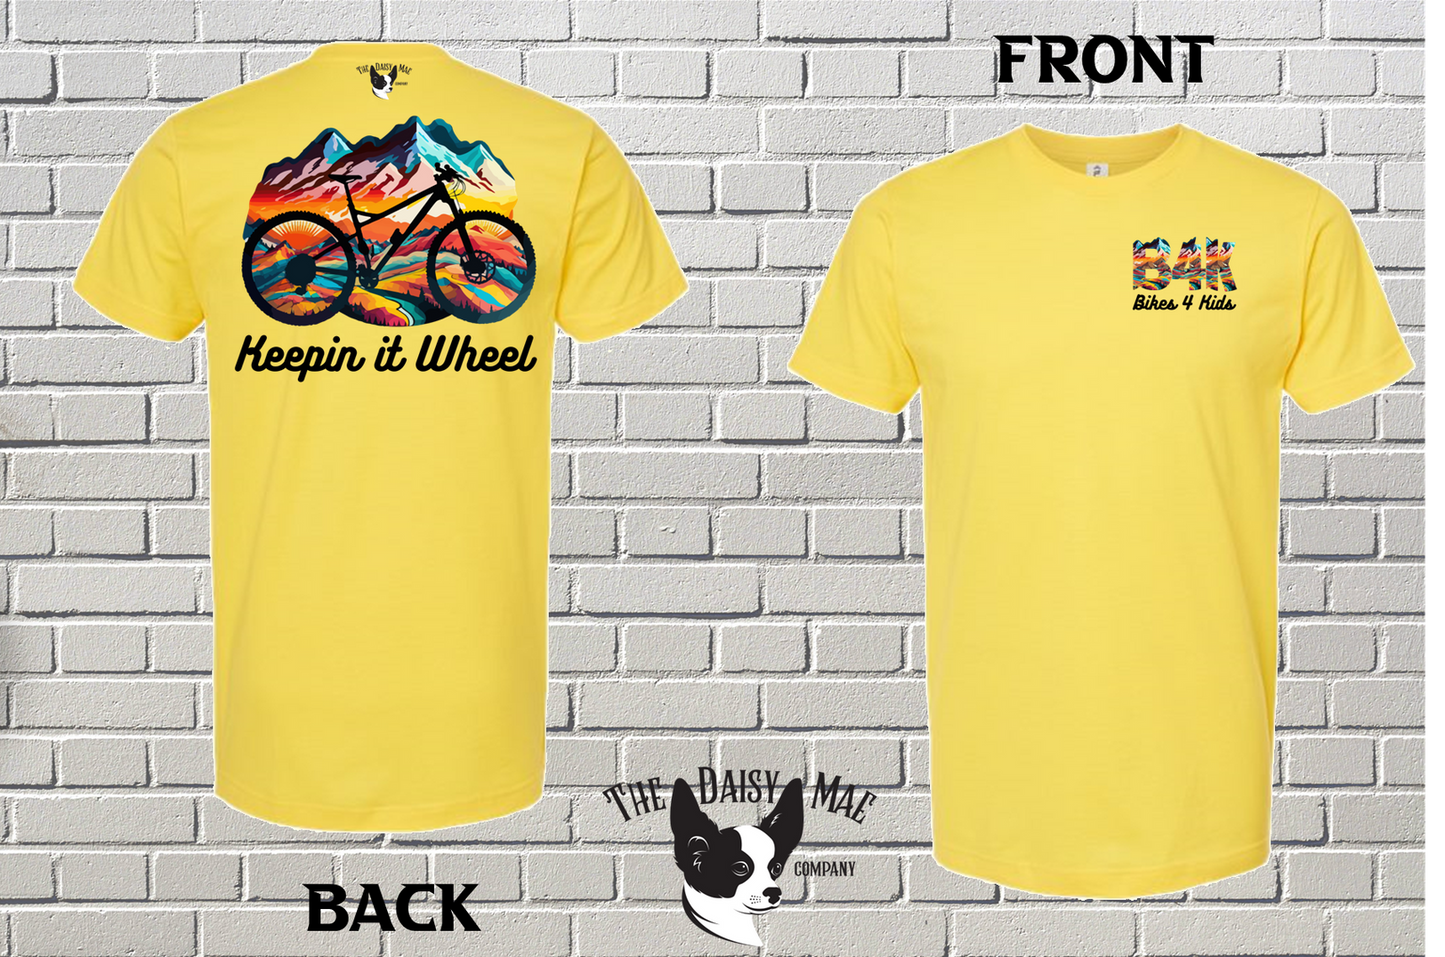 Bikes 4 Kids fundraiser T-shirts